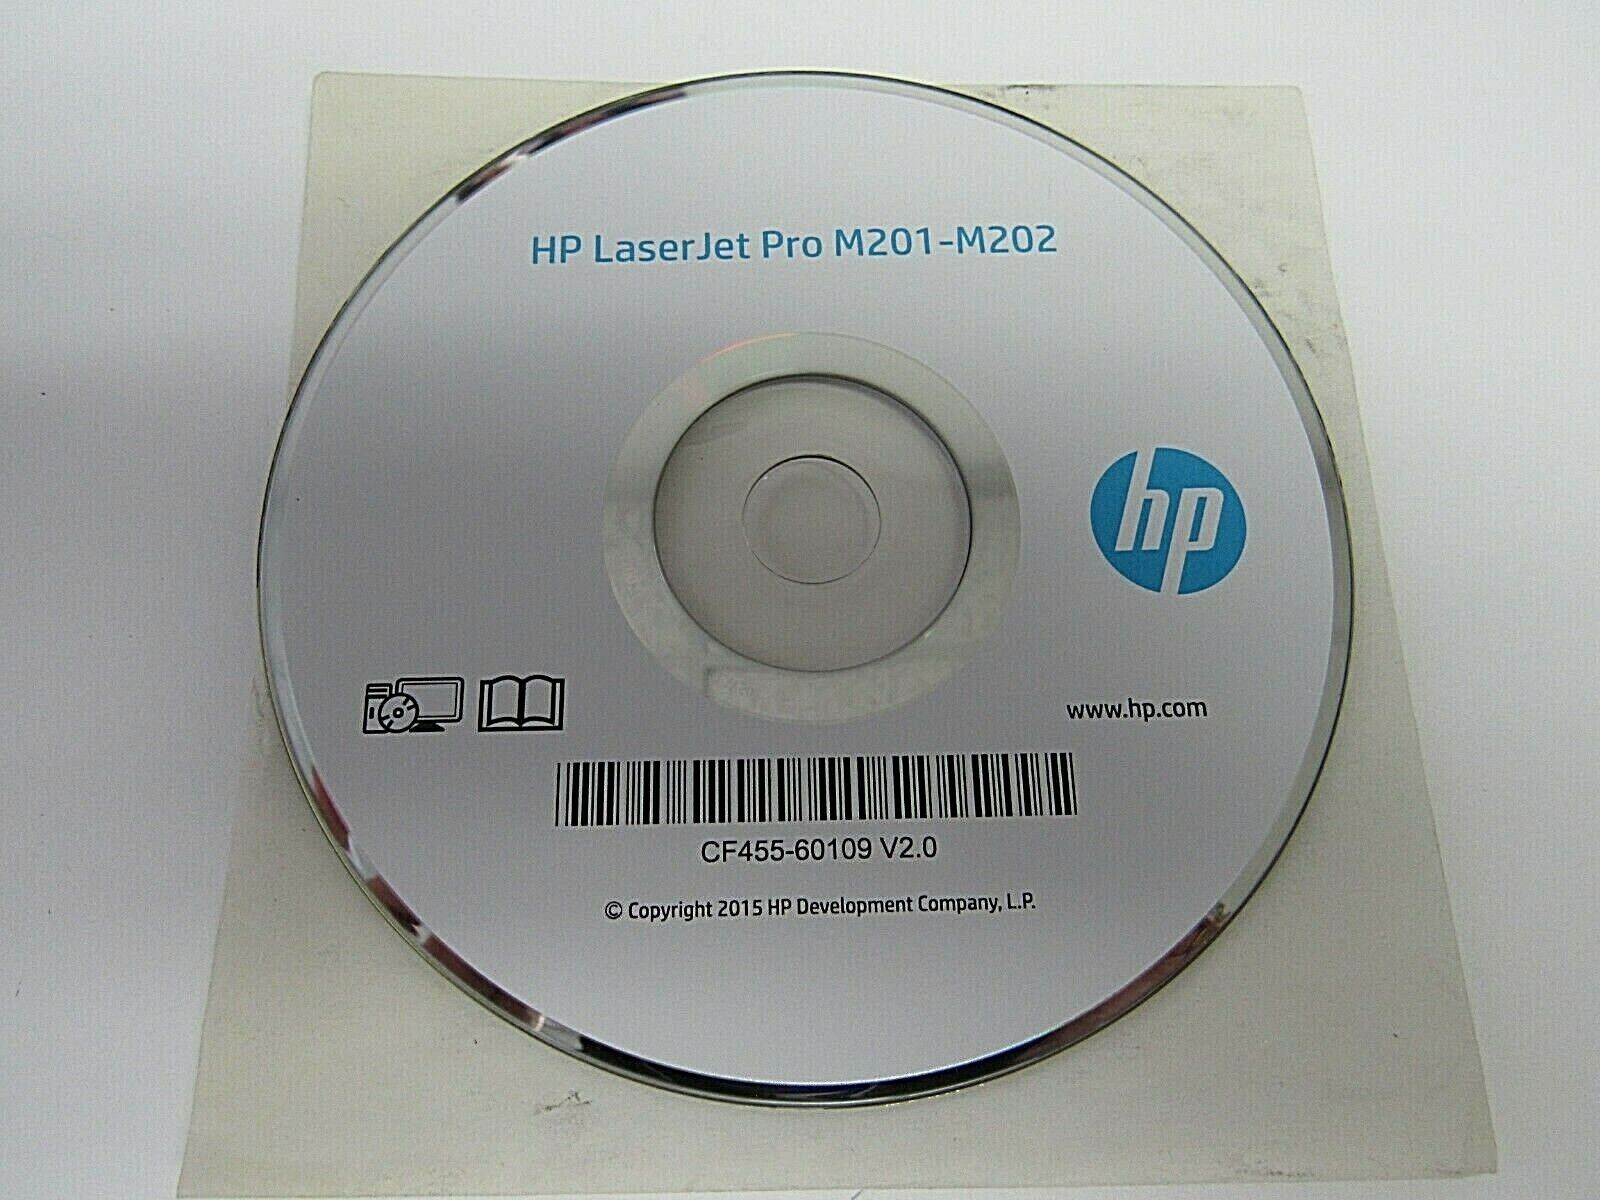 HP LASERJET PRO M201-M202 SOFTWARE CD